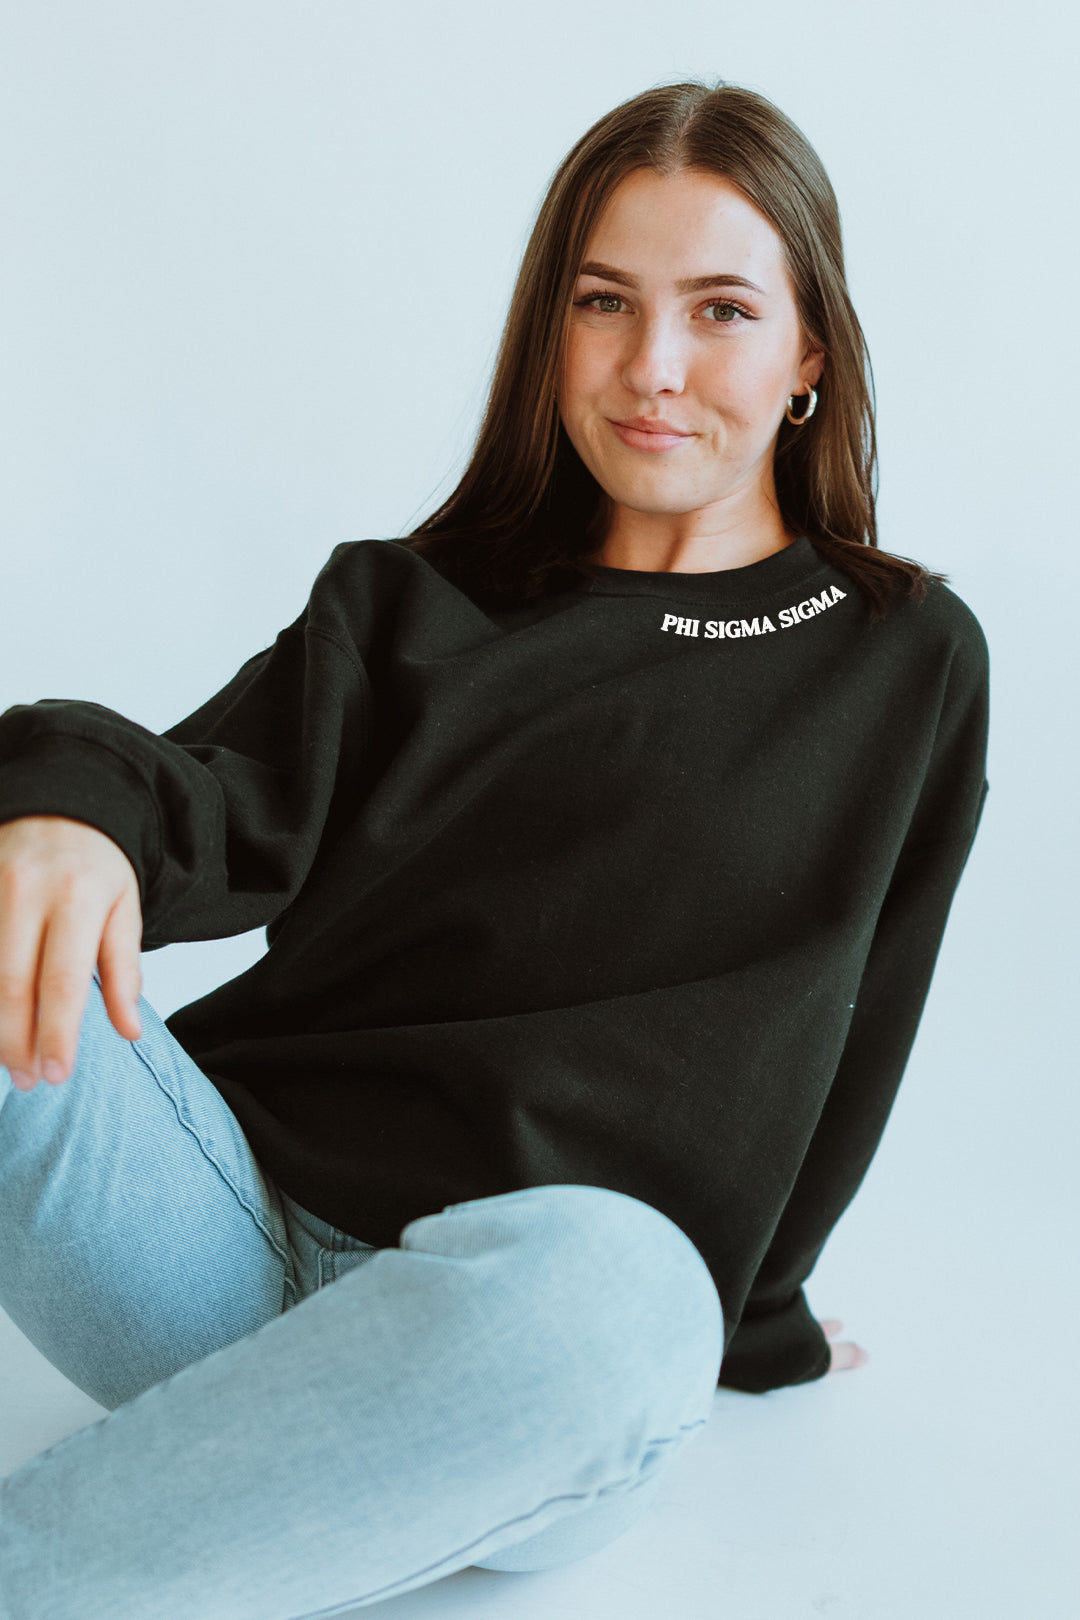 Black sweatshirt with White Collar text  - Phi Sigma Sigma